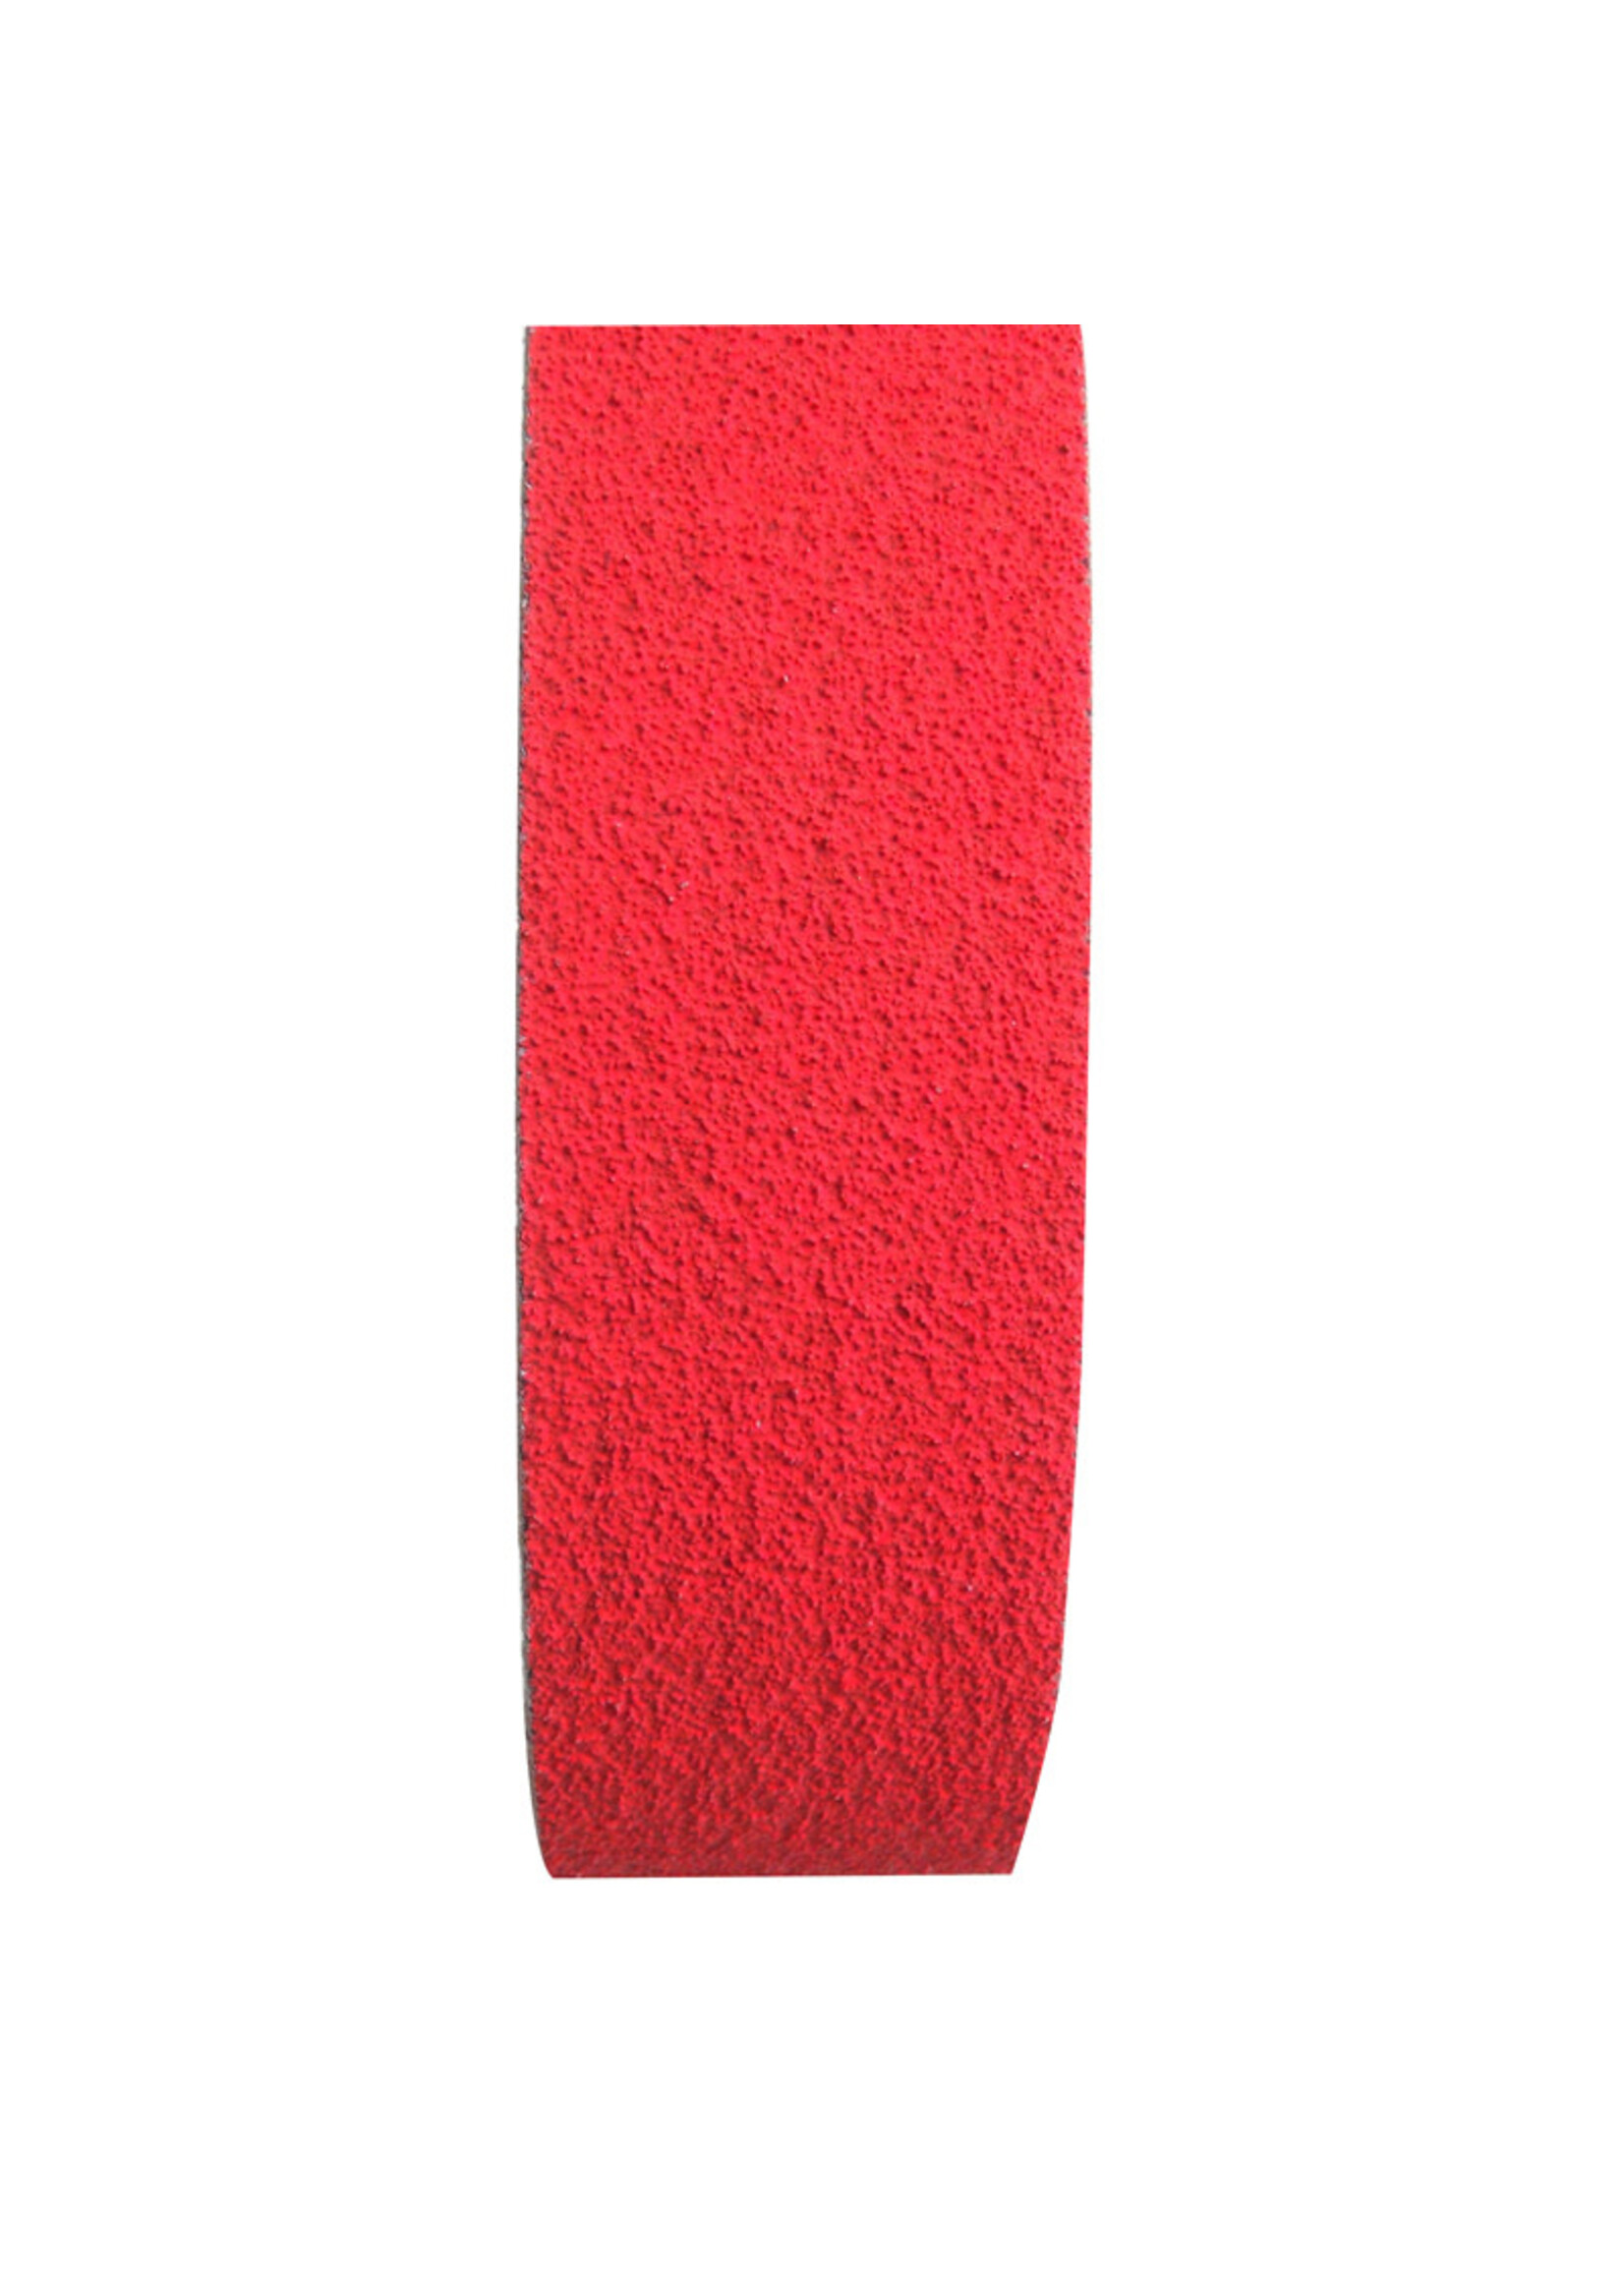 Foot Pro 2 x 48'' Belt Red Ceramic 40 grit